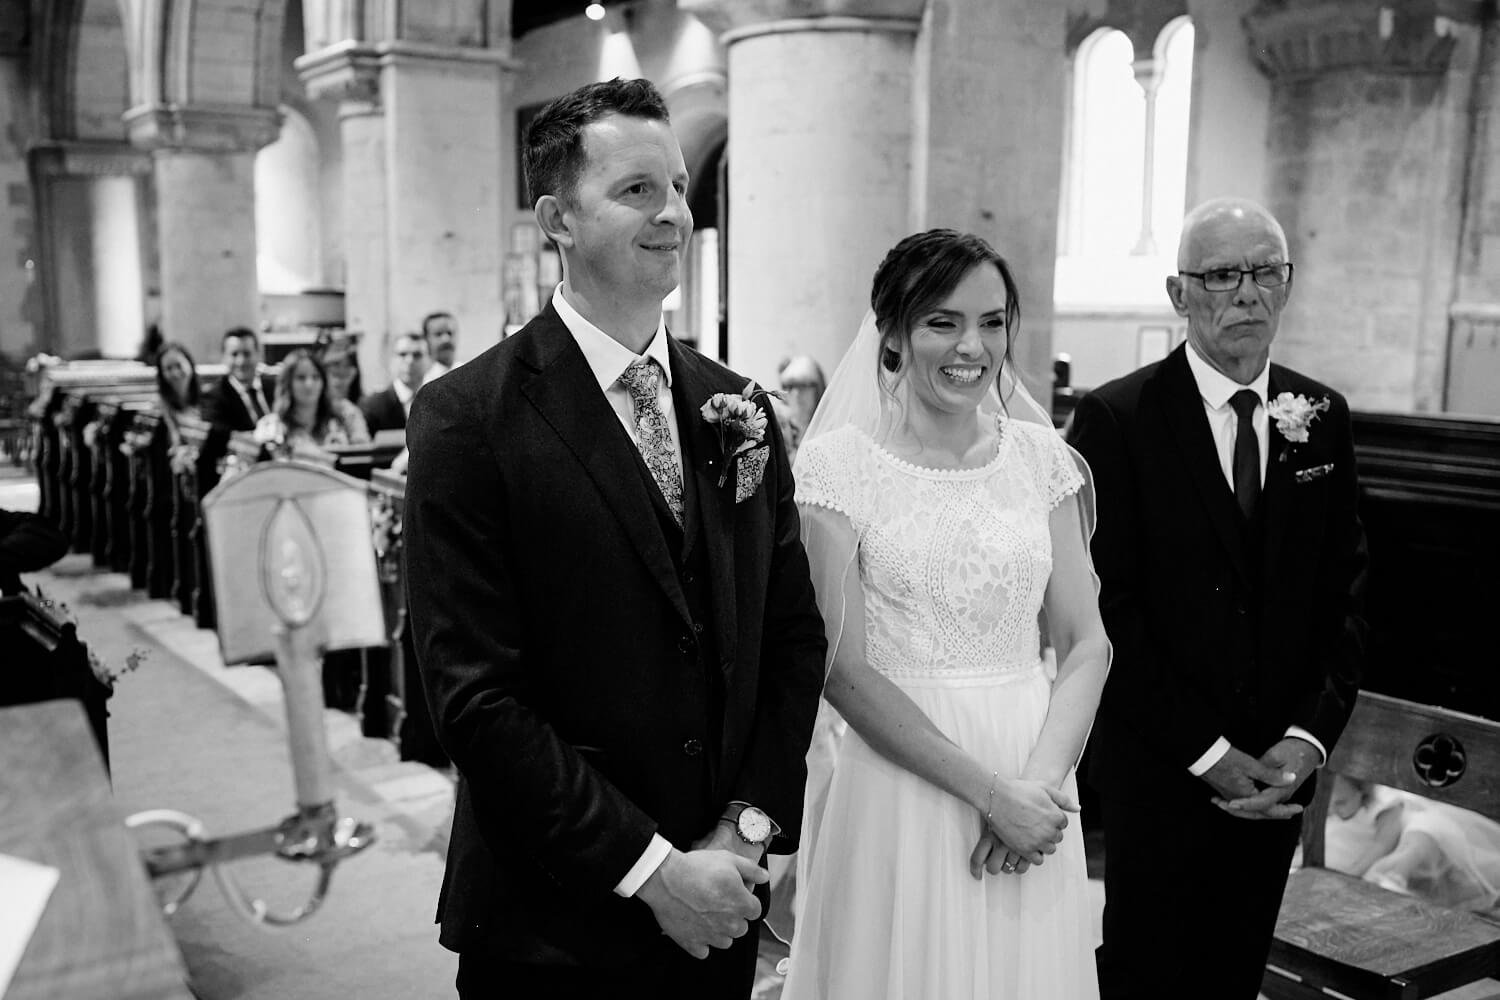 Wedding Photographer, Surrey | Leanne and Oli’s Farnham Wedding 19